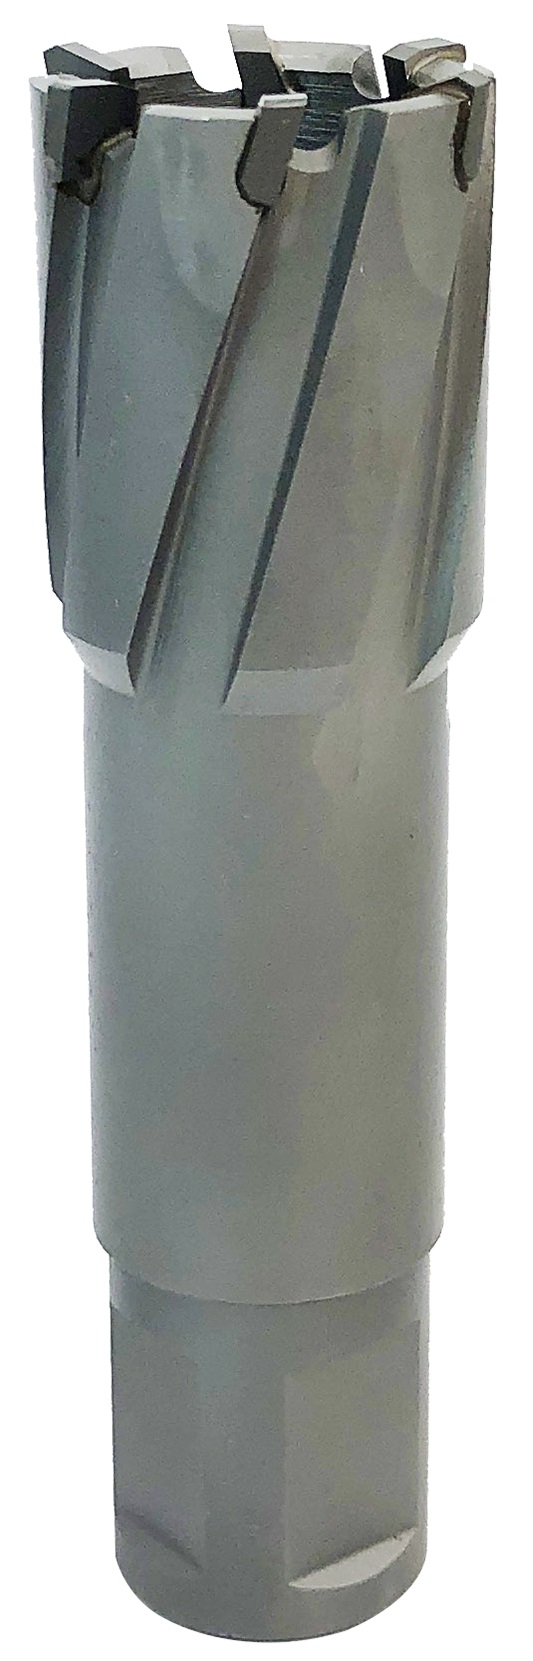 Корончатое сверло (фреза кольцевая) Ø25 L=55/92 мм №318 WELDON19 TCT (твердый сплав) ТМ ПрофОснастка